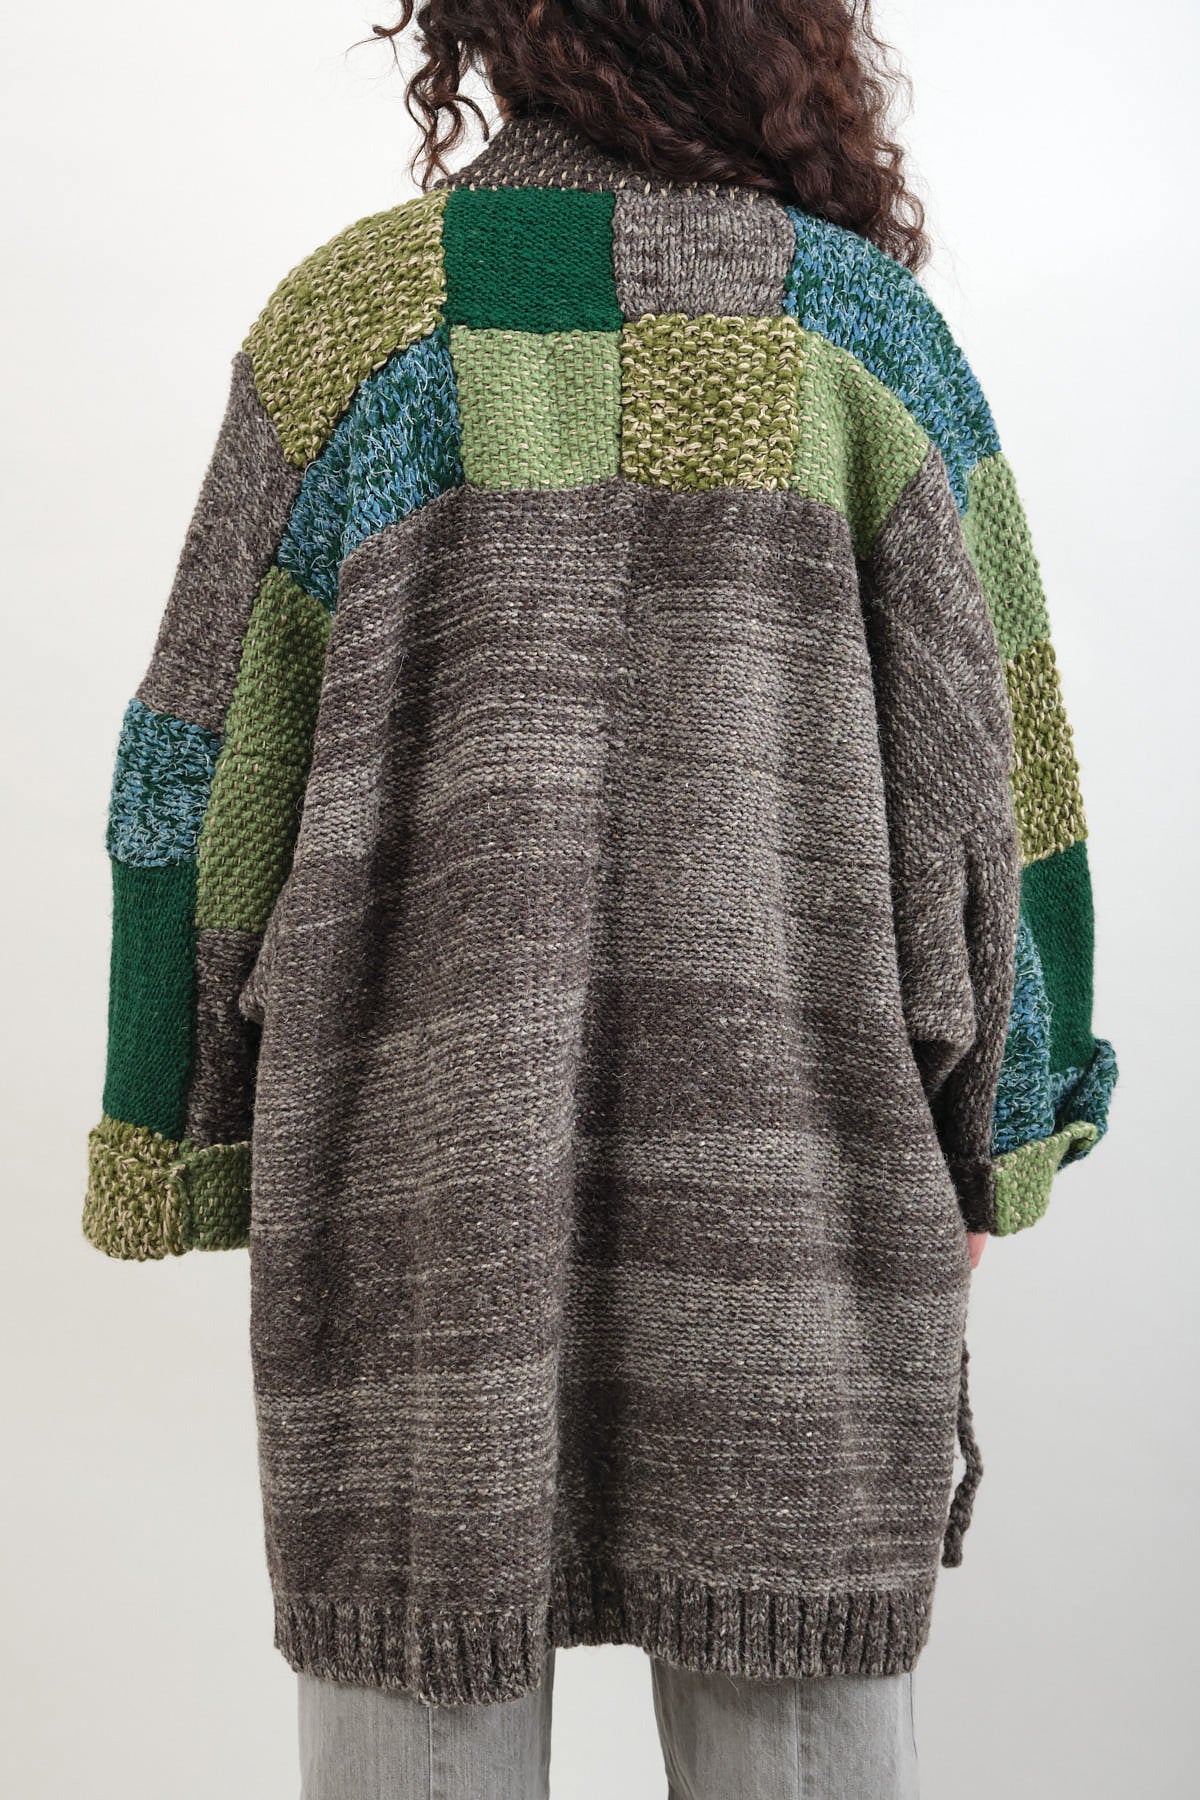 Multi Colored Wool Kapital 3G Wool Hand Knit Tugihagi Kesa Cardigan